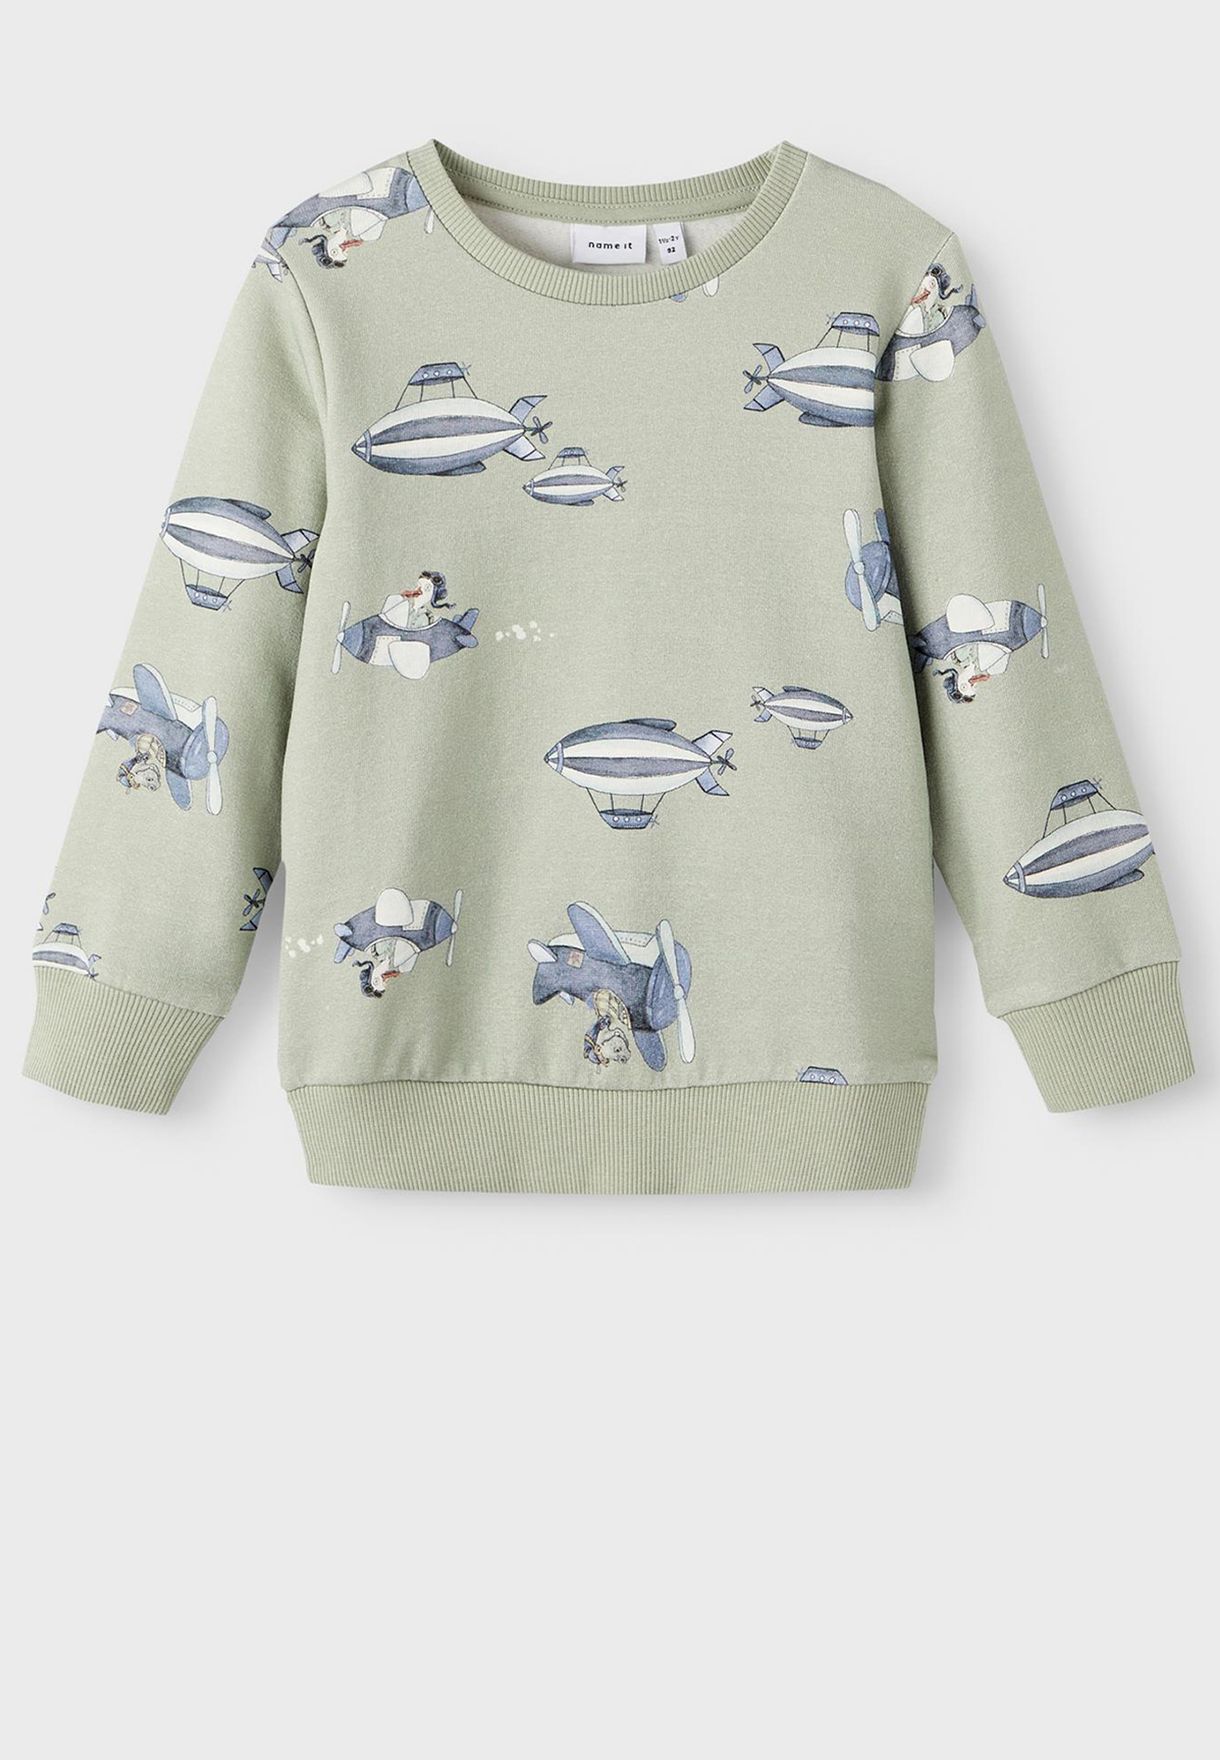 Kids Airplane Print Sweatshirt